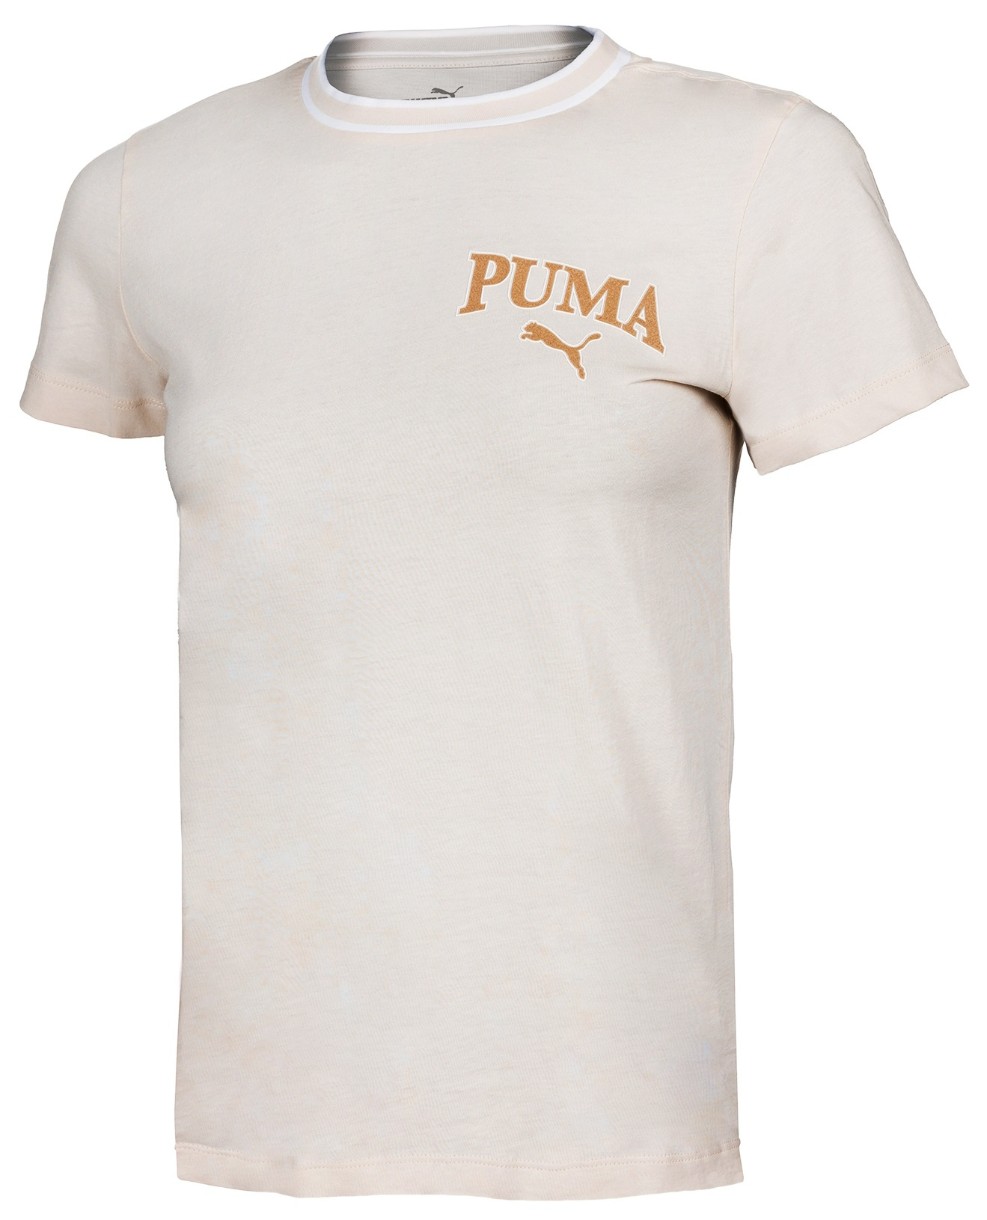 Женская футболка Puma Squad Tee Alpine Snow, s.M